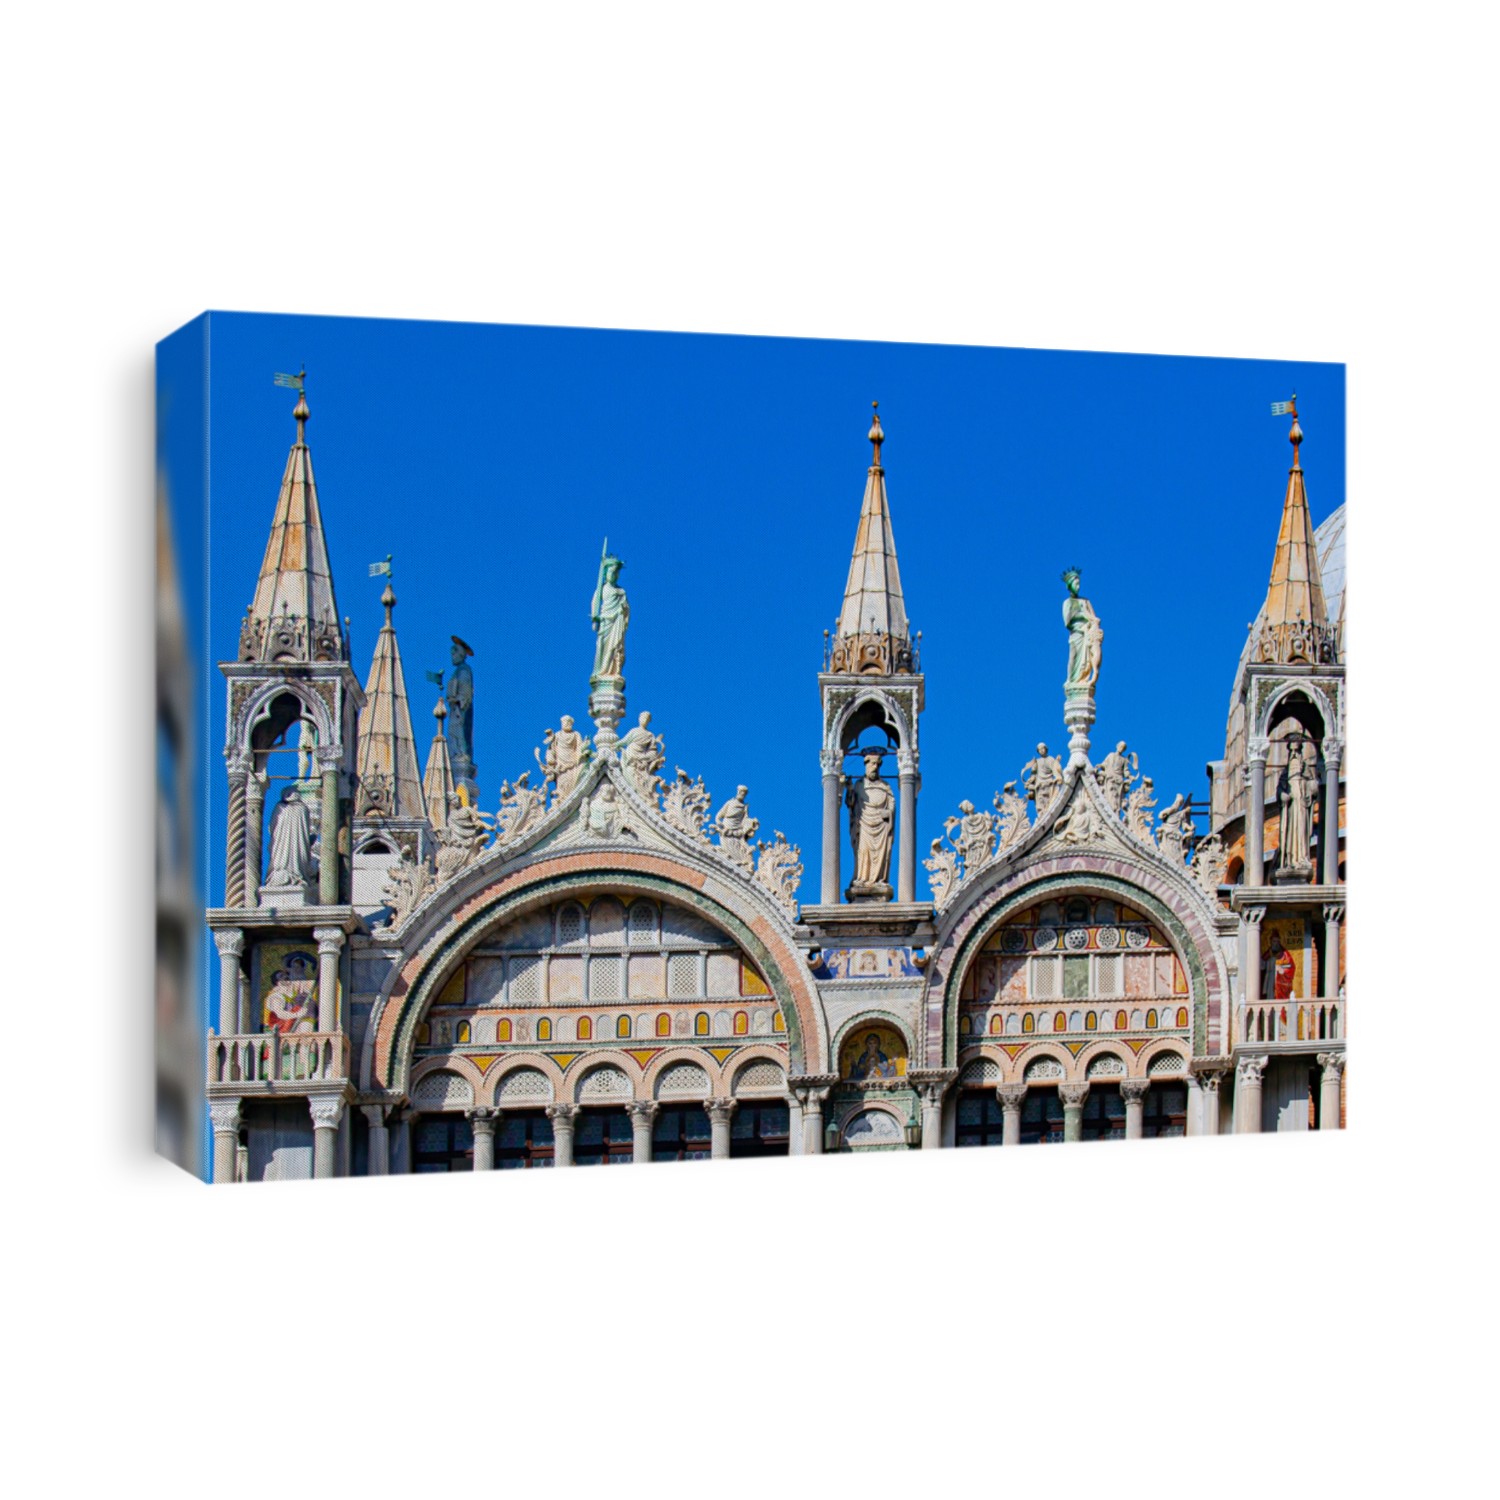 Basilica di San Marco or St Mark's Basilica, Venice, Italy
